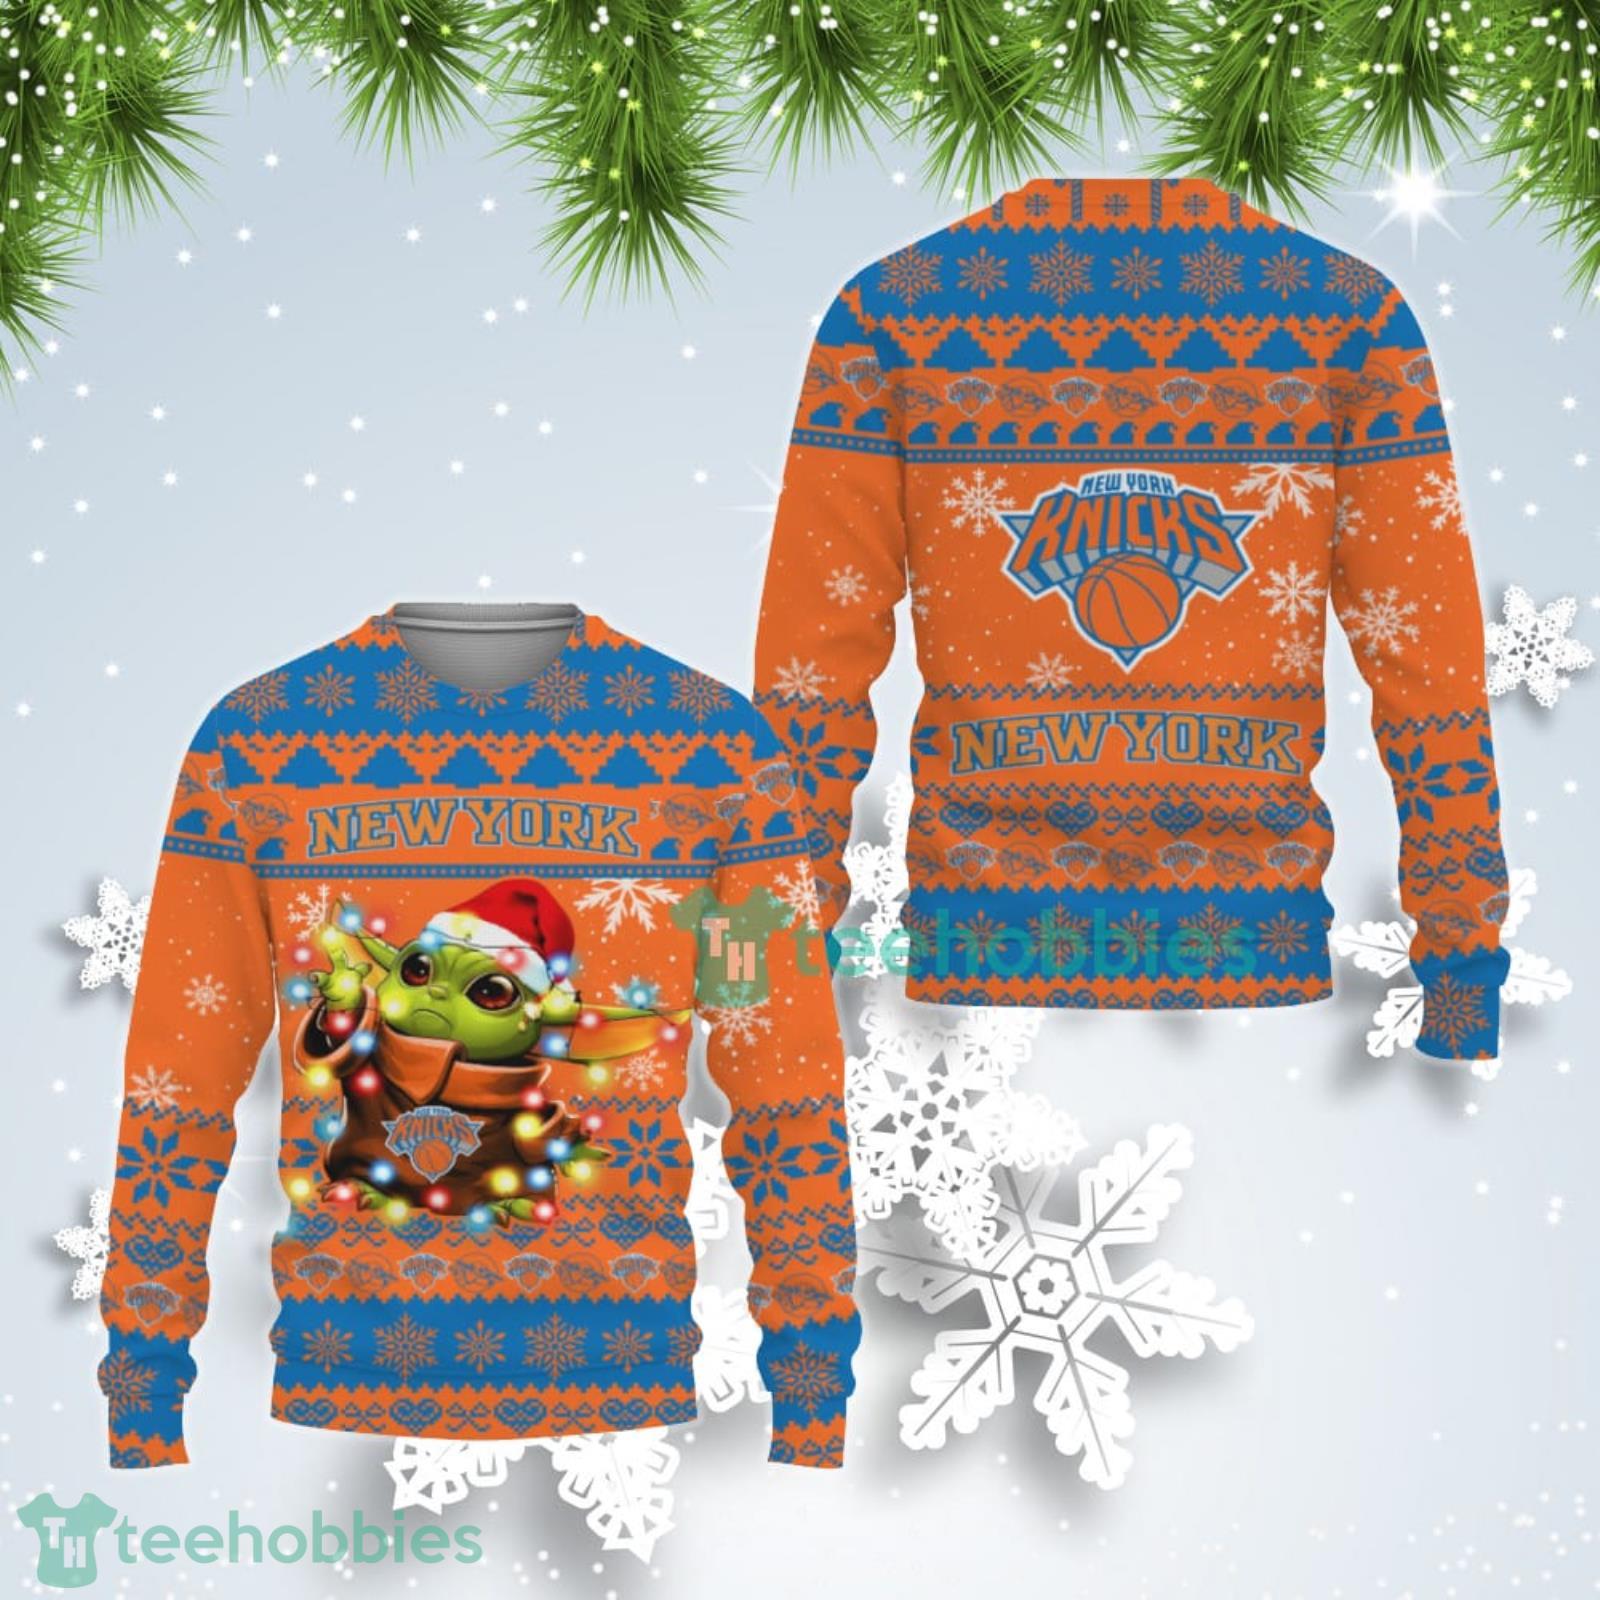 New York Knicks Cute Baby Yoda Star Wars Ugly Christmas Sweater Product Photo 1